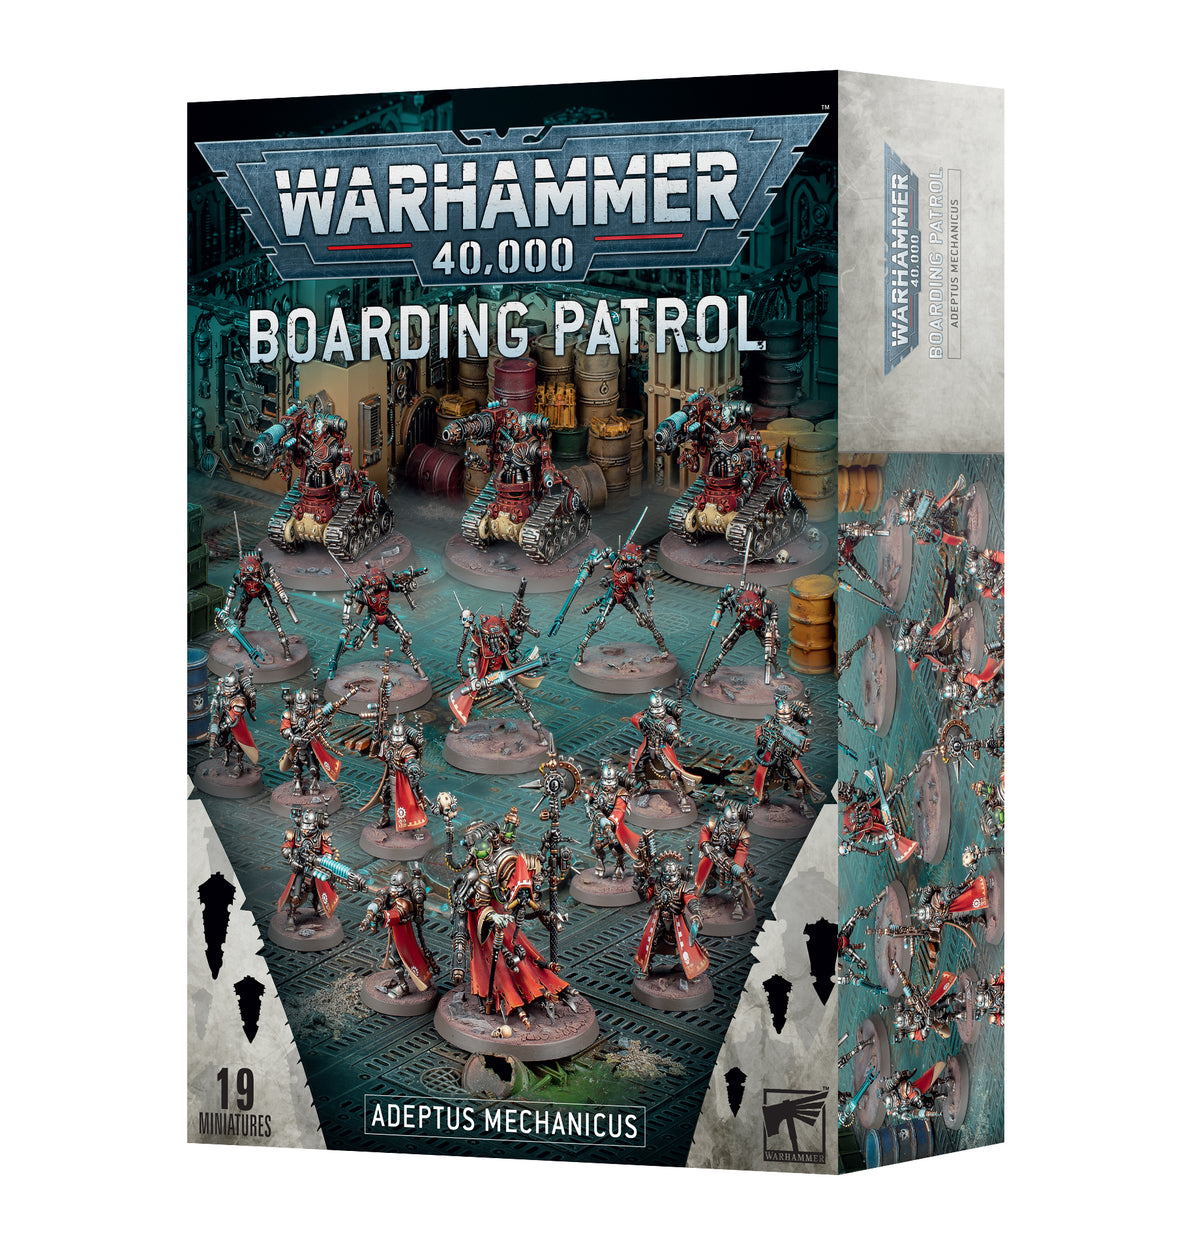 Boarding Patrol - Adeptus Mechanicus (Warhammer 40,000)